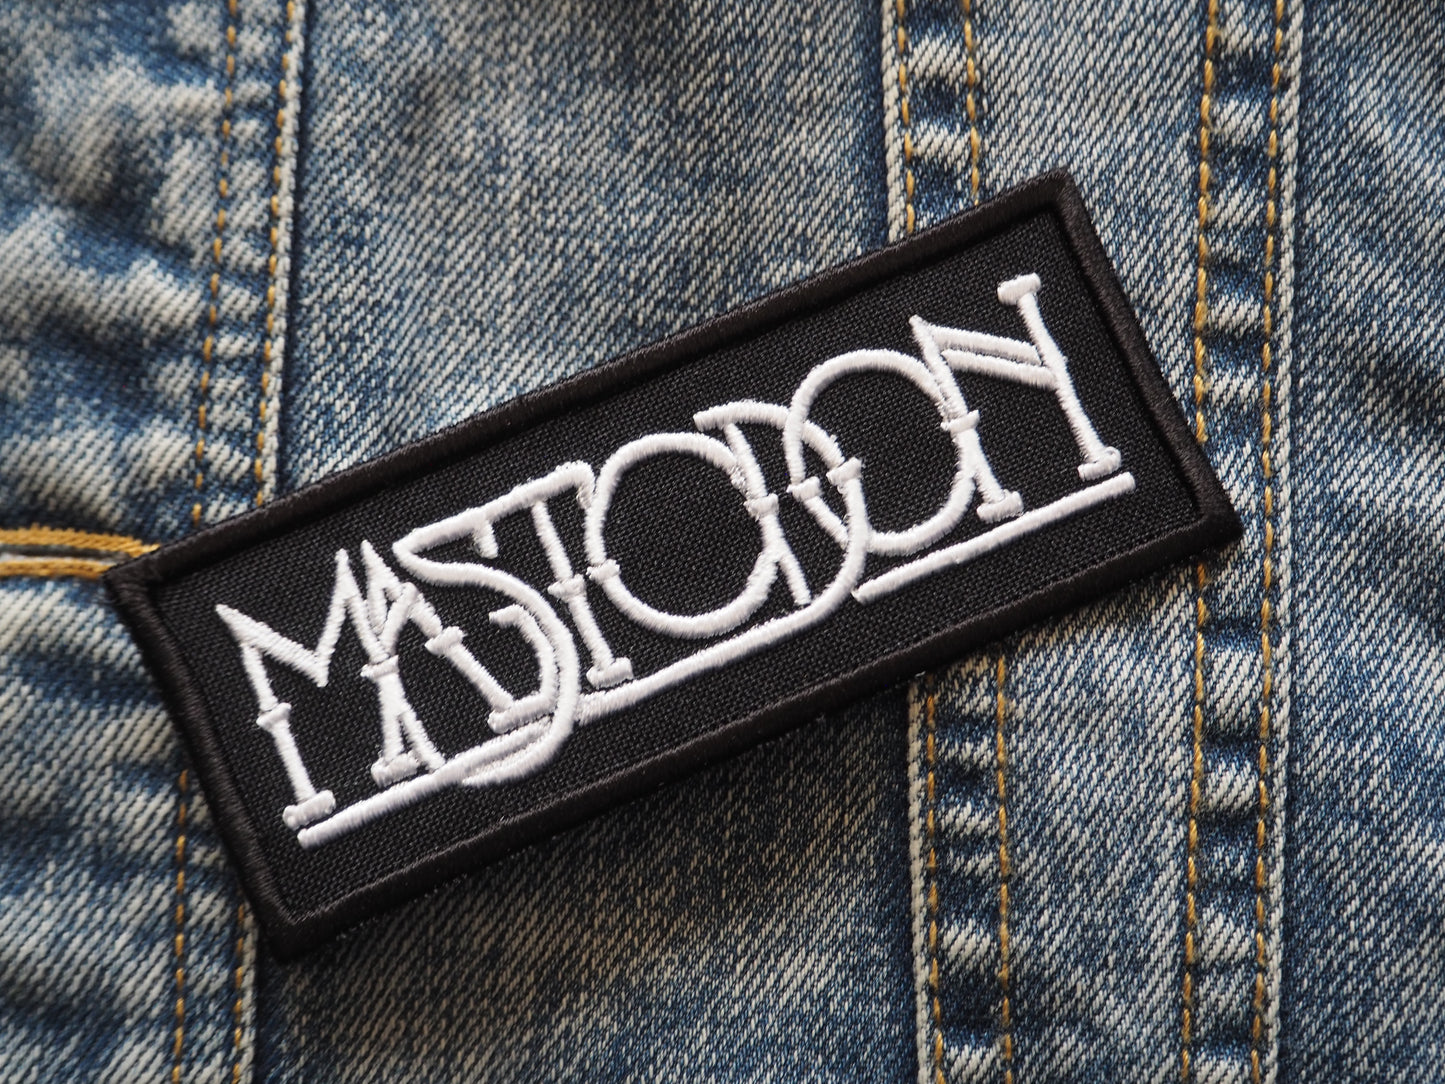 Mastodon Patch